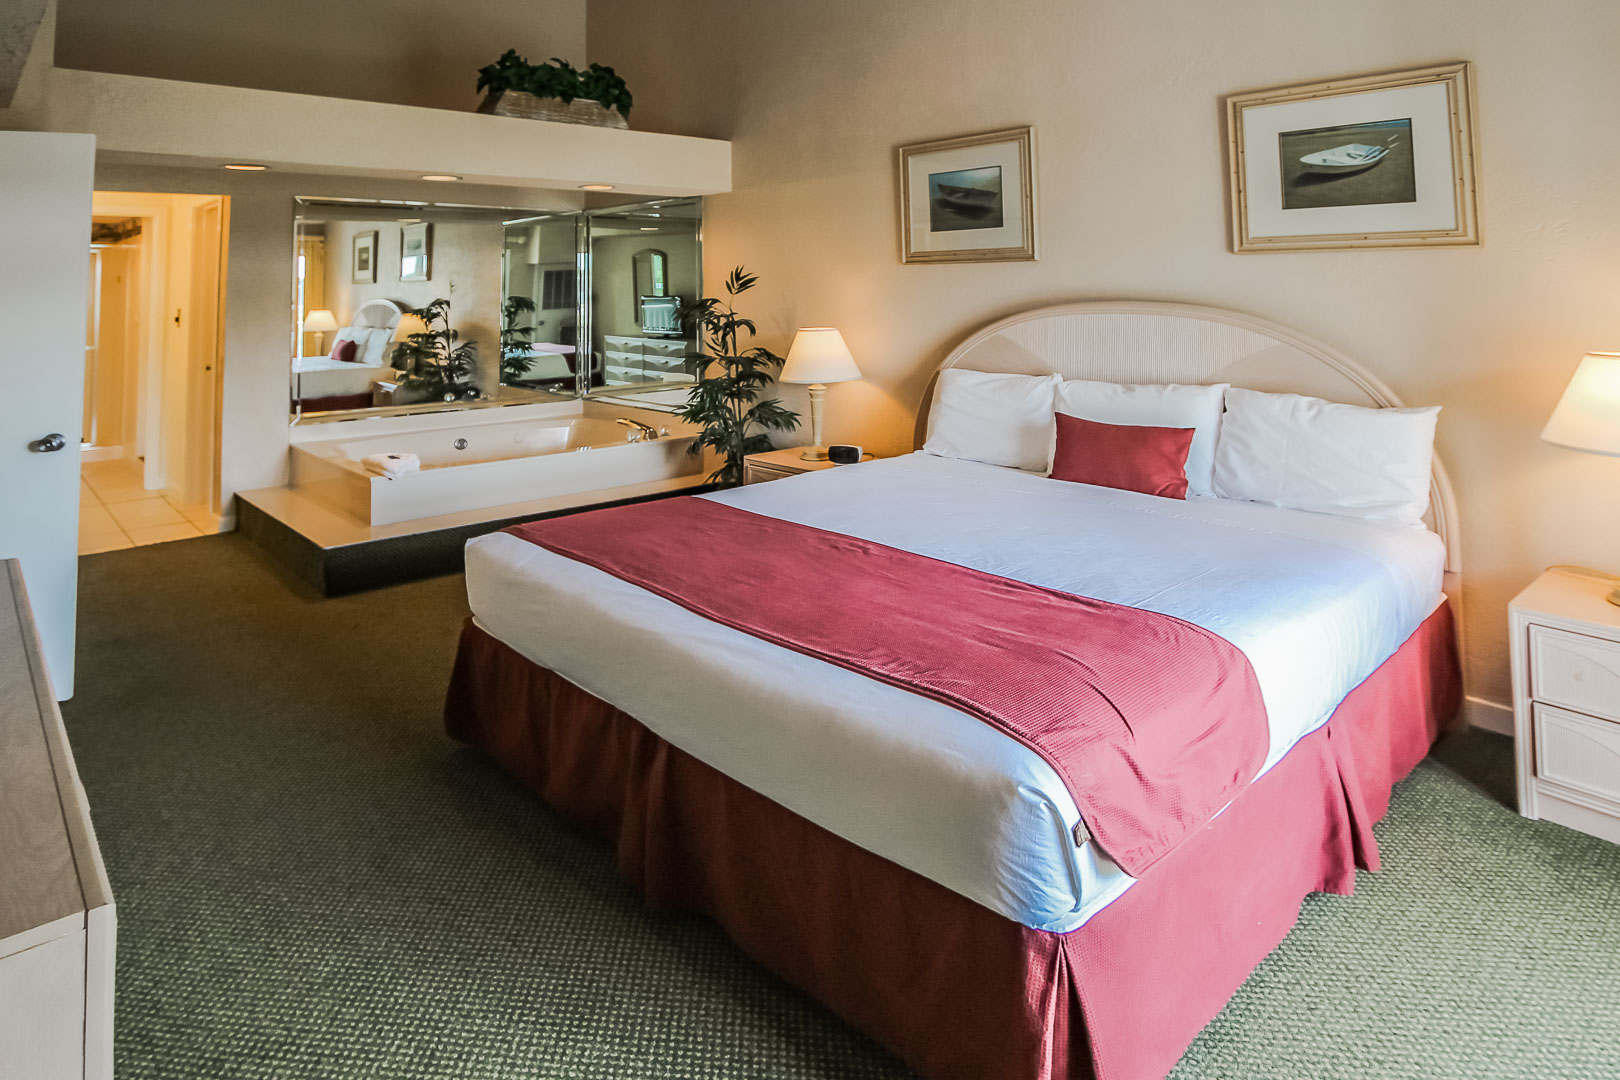 A cozy master bedroom at VRI's Players Club Resort in Hilton Head Island, South Carolina.